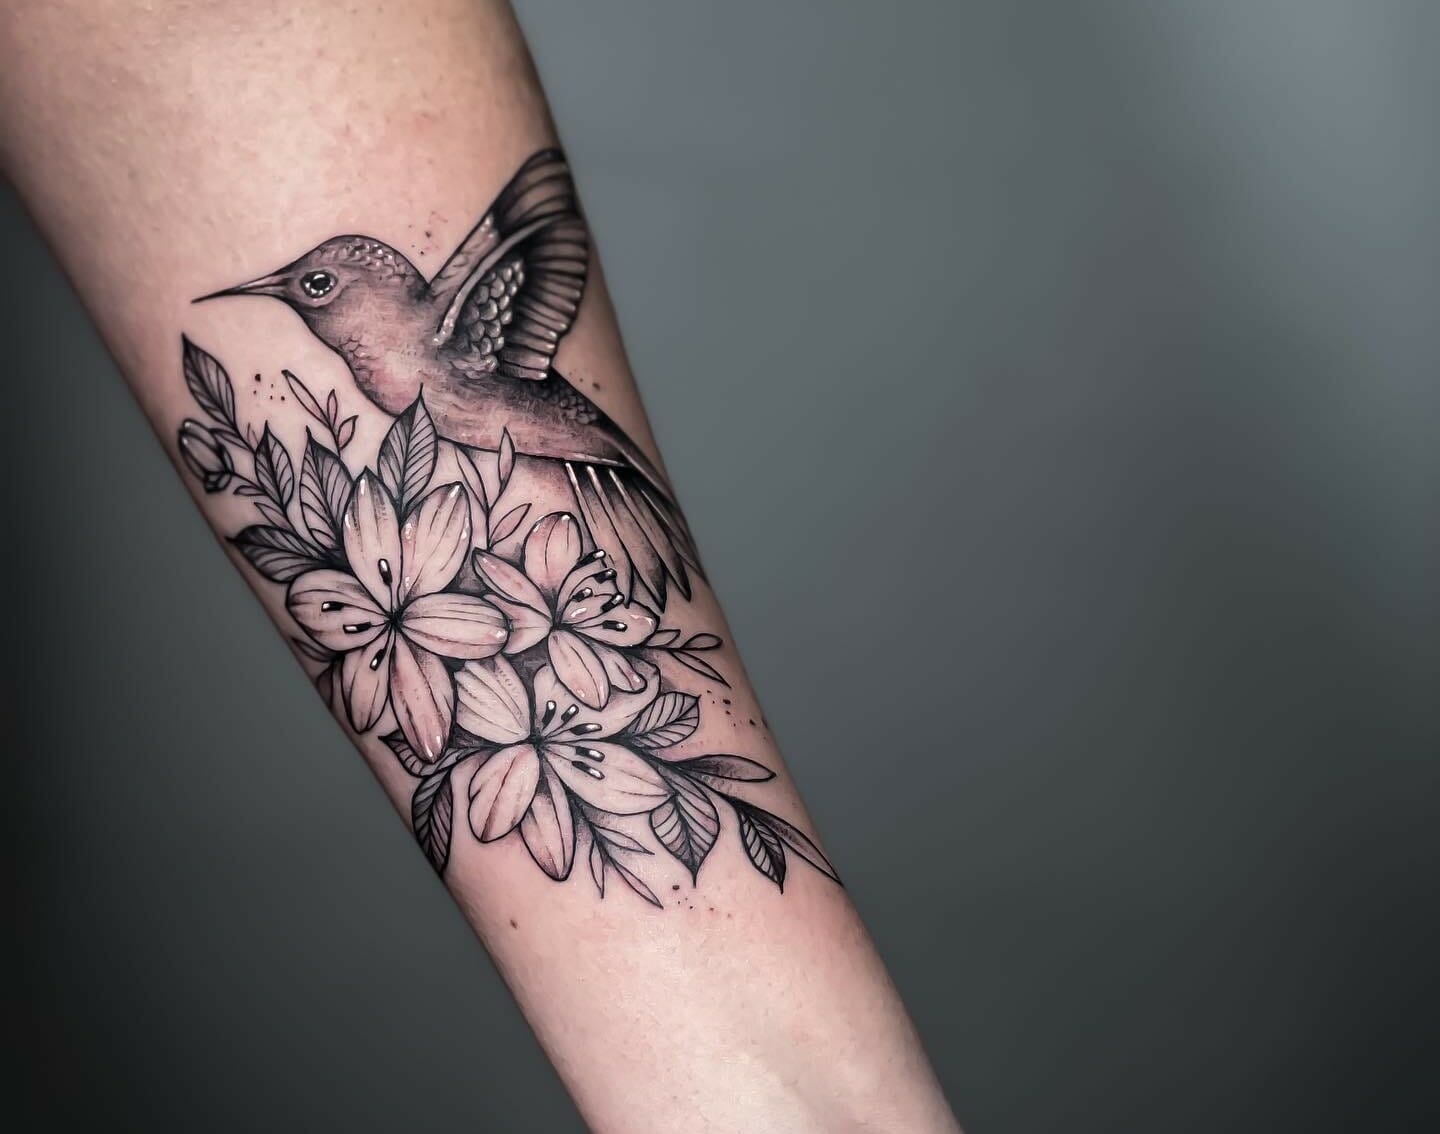 10 Best Hummingbird Tattoo Ideas For Men That Will Blow Your Mind!

+2023